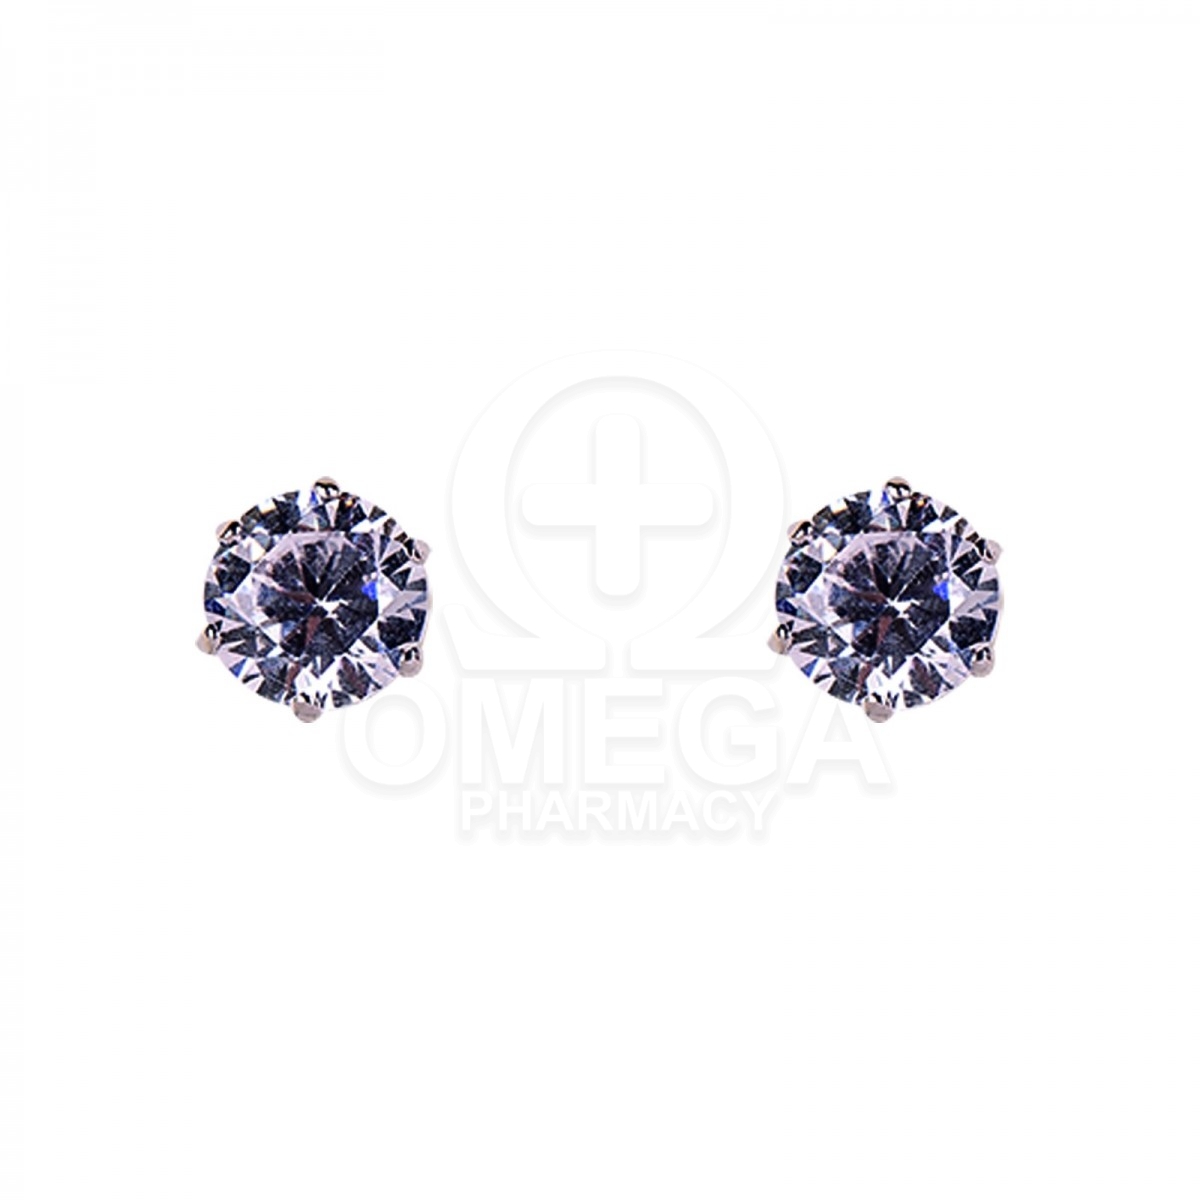 MEDISEI Dalee Jewels Earrings No 05413 White Studs Υποαλλεργικά Σκουλαρίκια  από Ασήμι 925 με Ρόδιο, Λευκό Ζιργκόν 1 Ζευγάρι